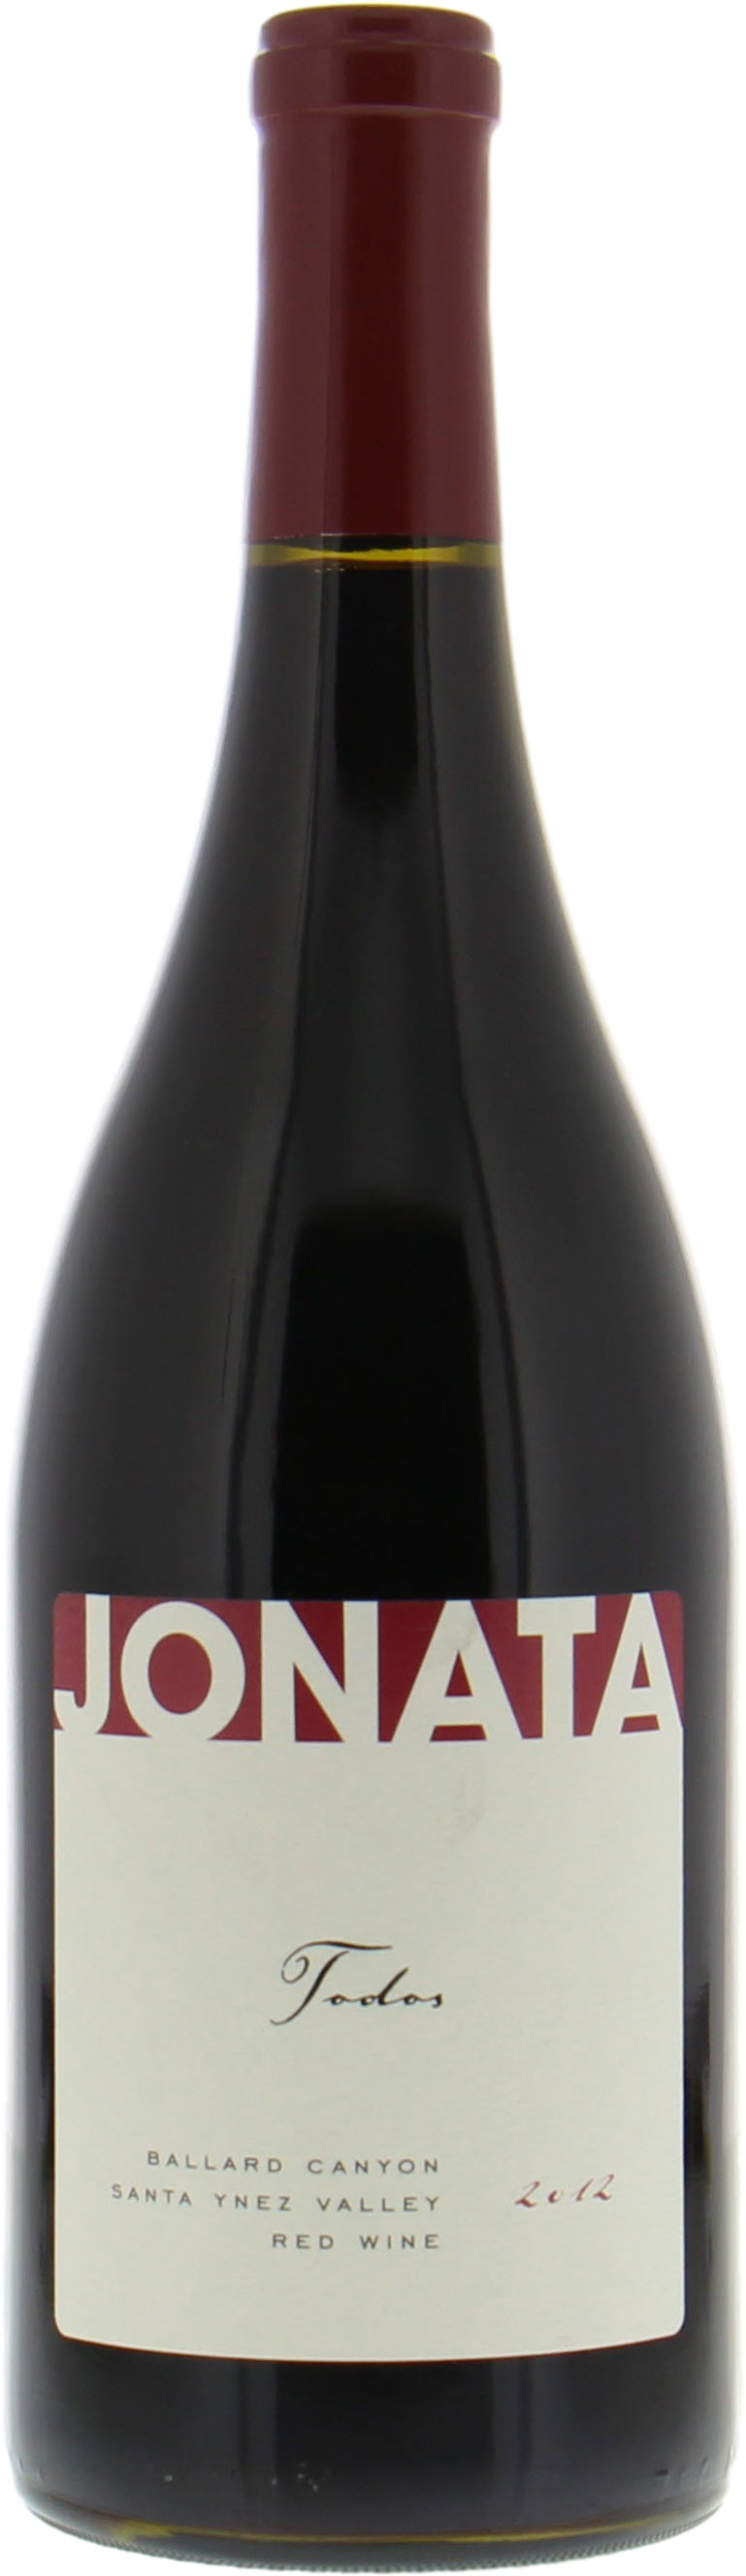 Jonata - Todos 2012 Perfect